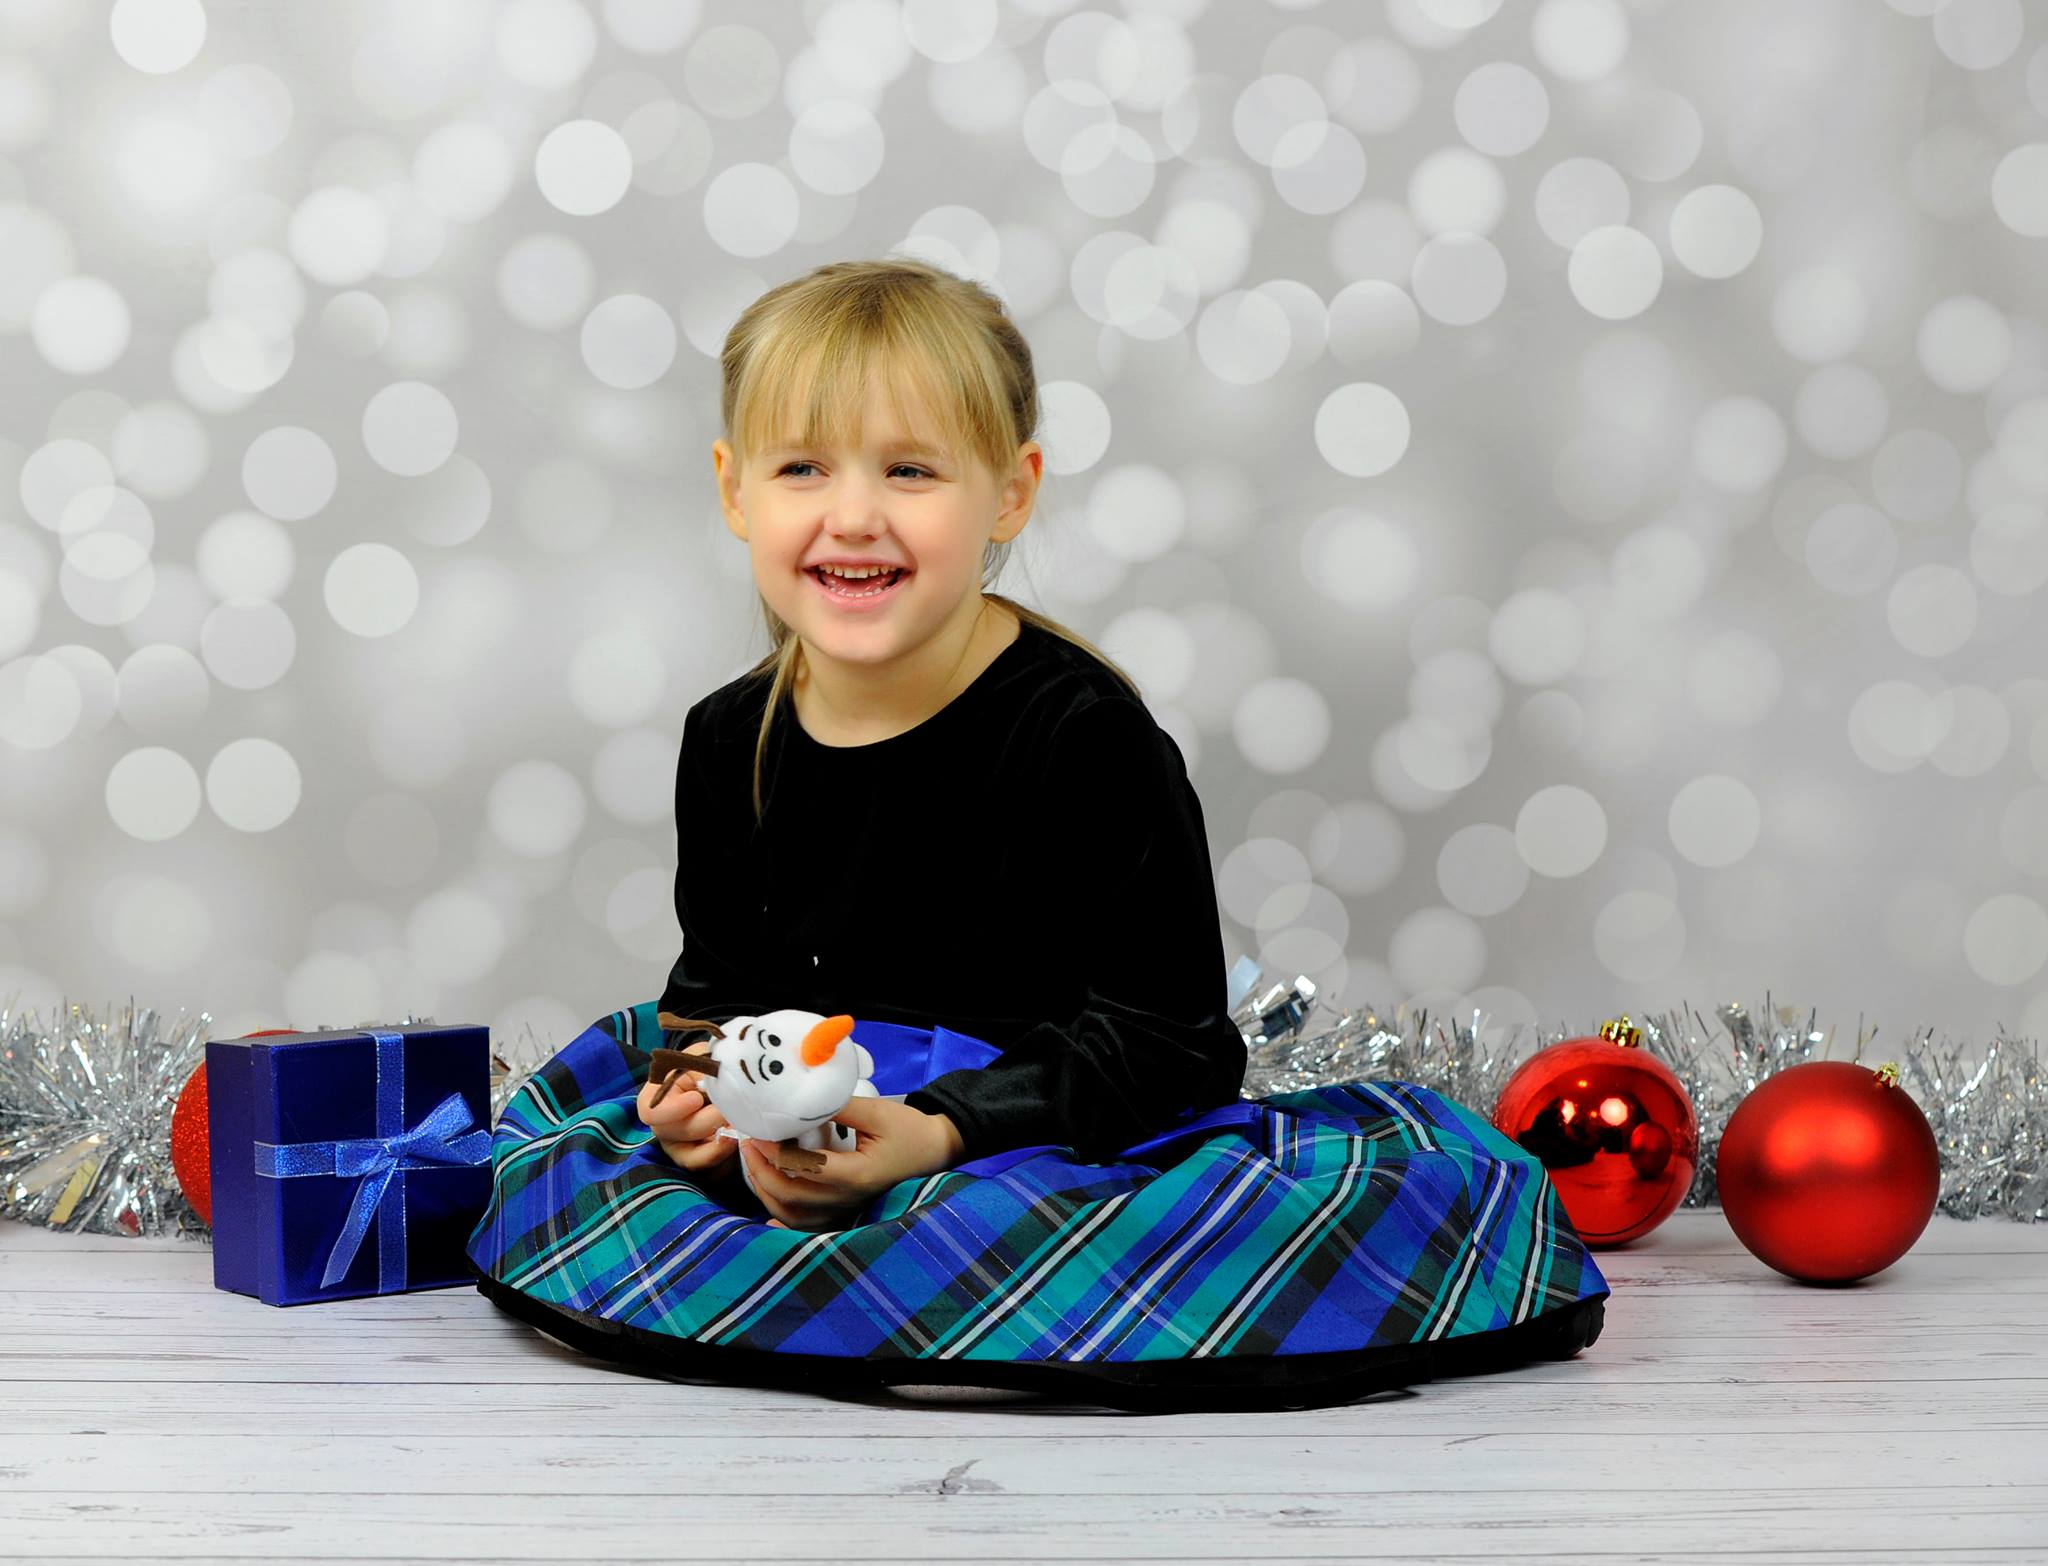 Our preschooler Four-year-old Michaela Lynn Brunke Christmas2015